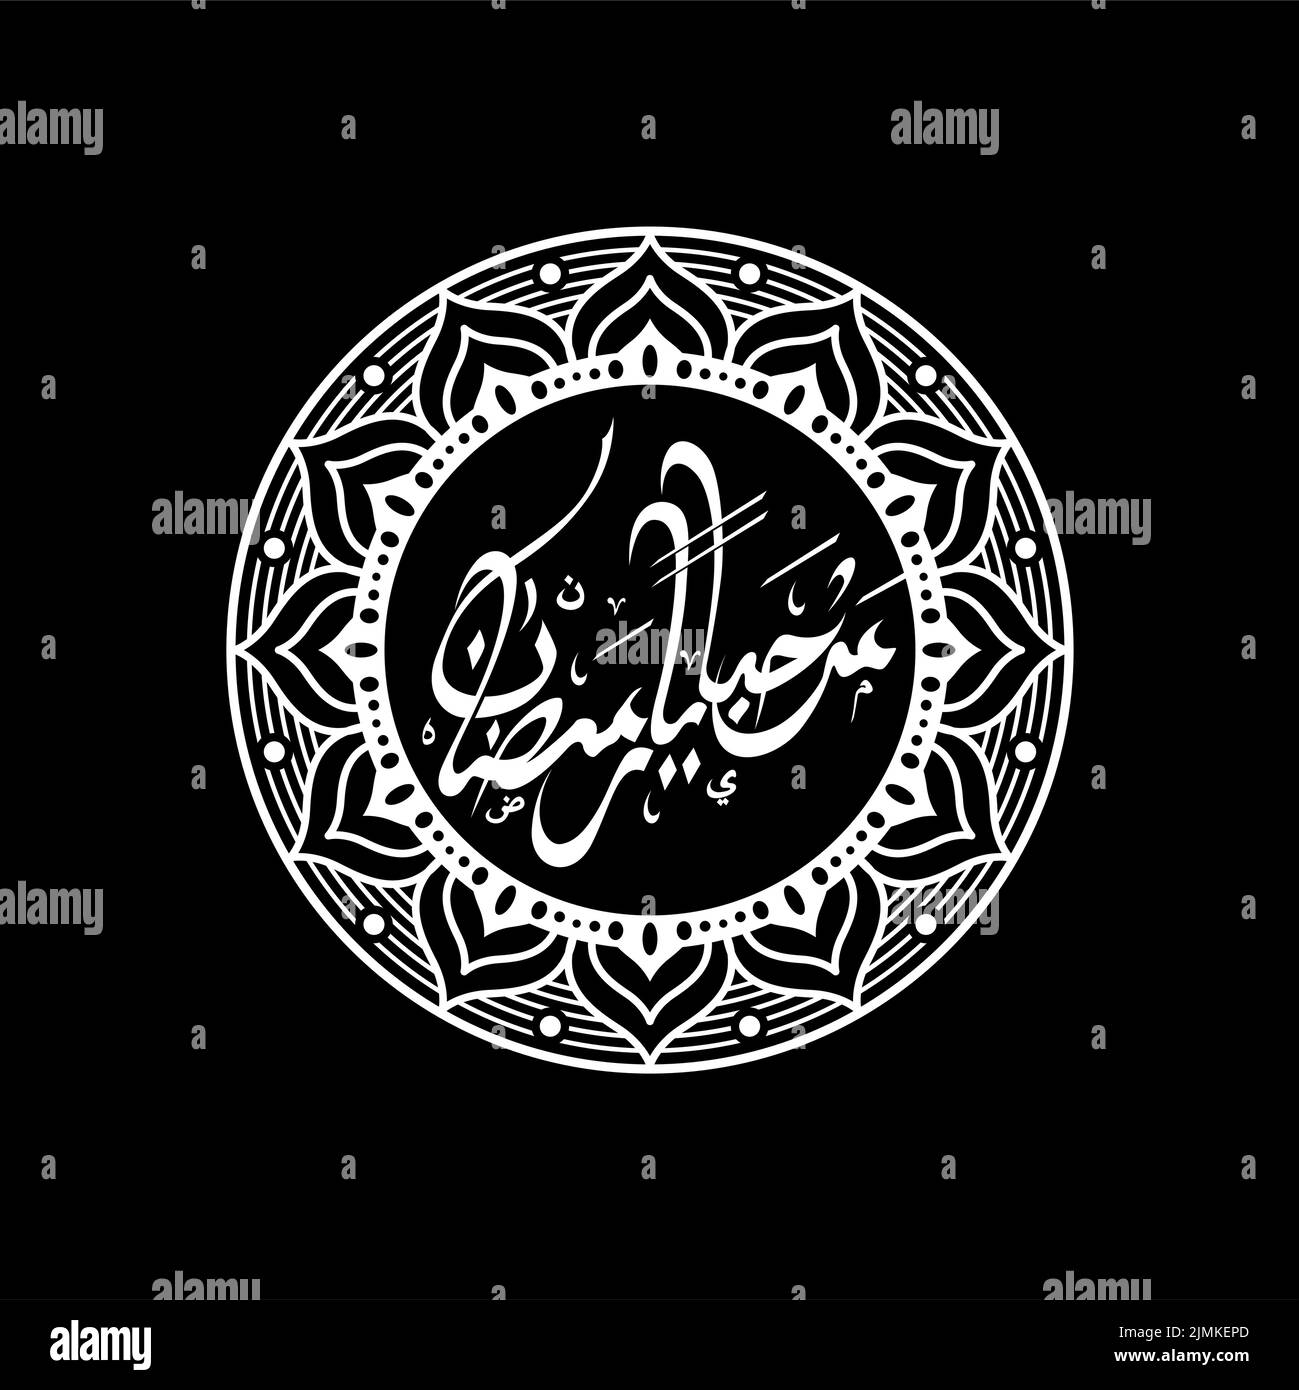 Calligraphie islamique Marhaban Yaa Ramadan Traduction « Welcome Ramadan » avec le vecteur décoratif du Mandala islamique Illustration de Vecteur